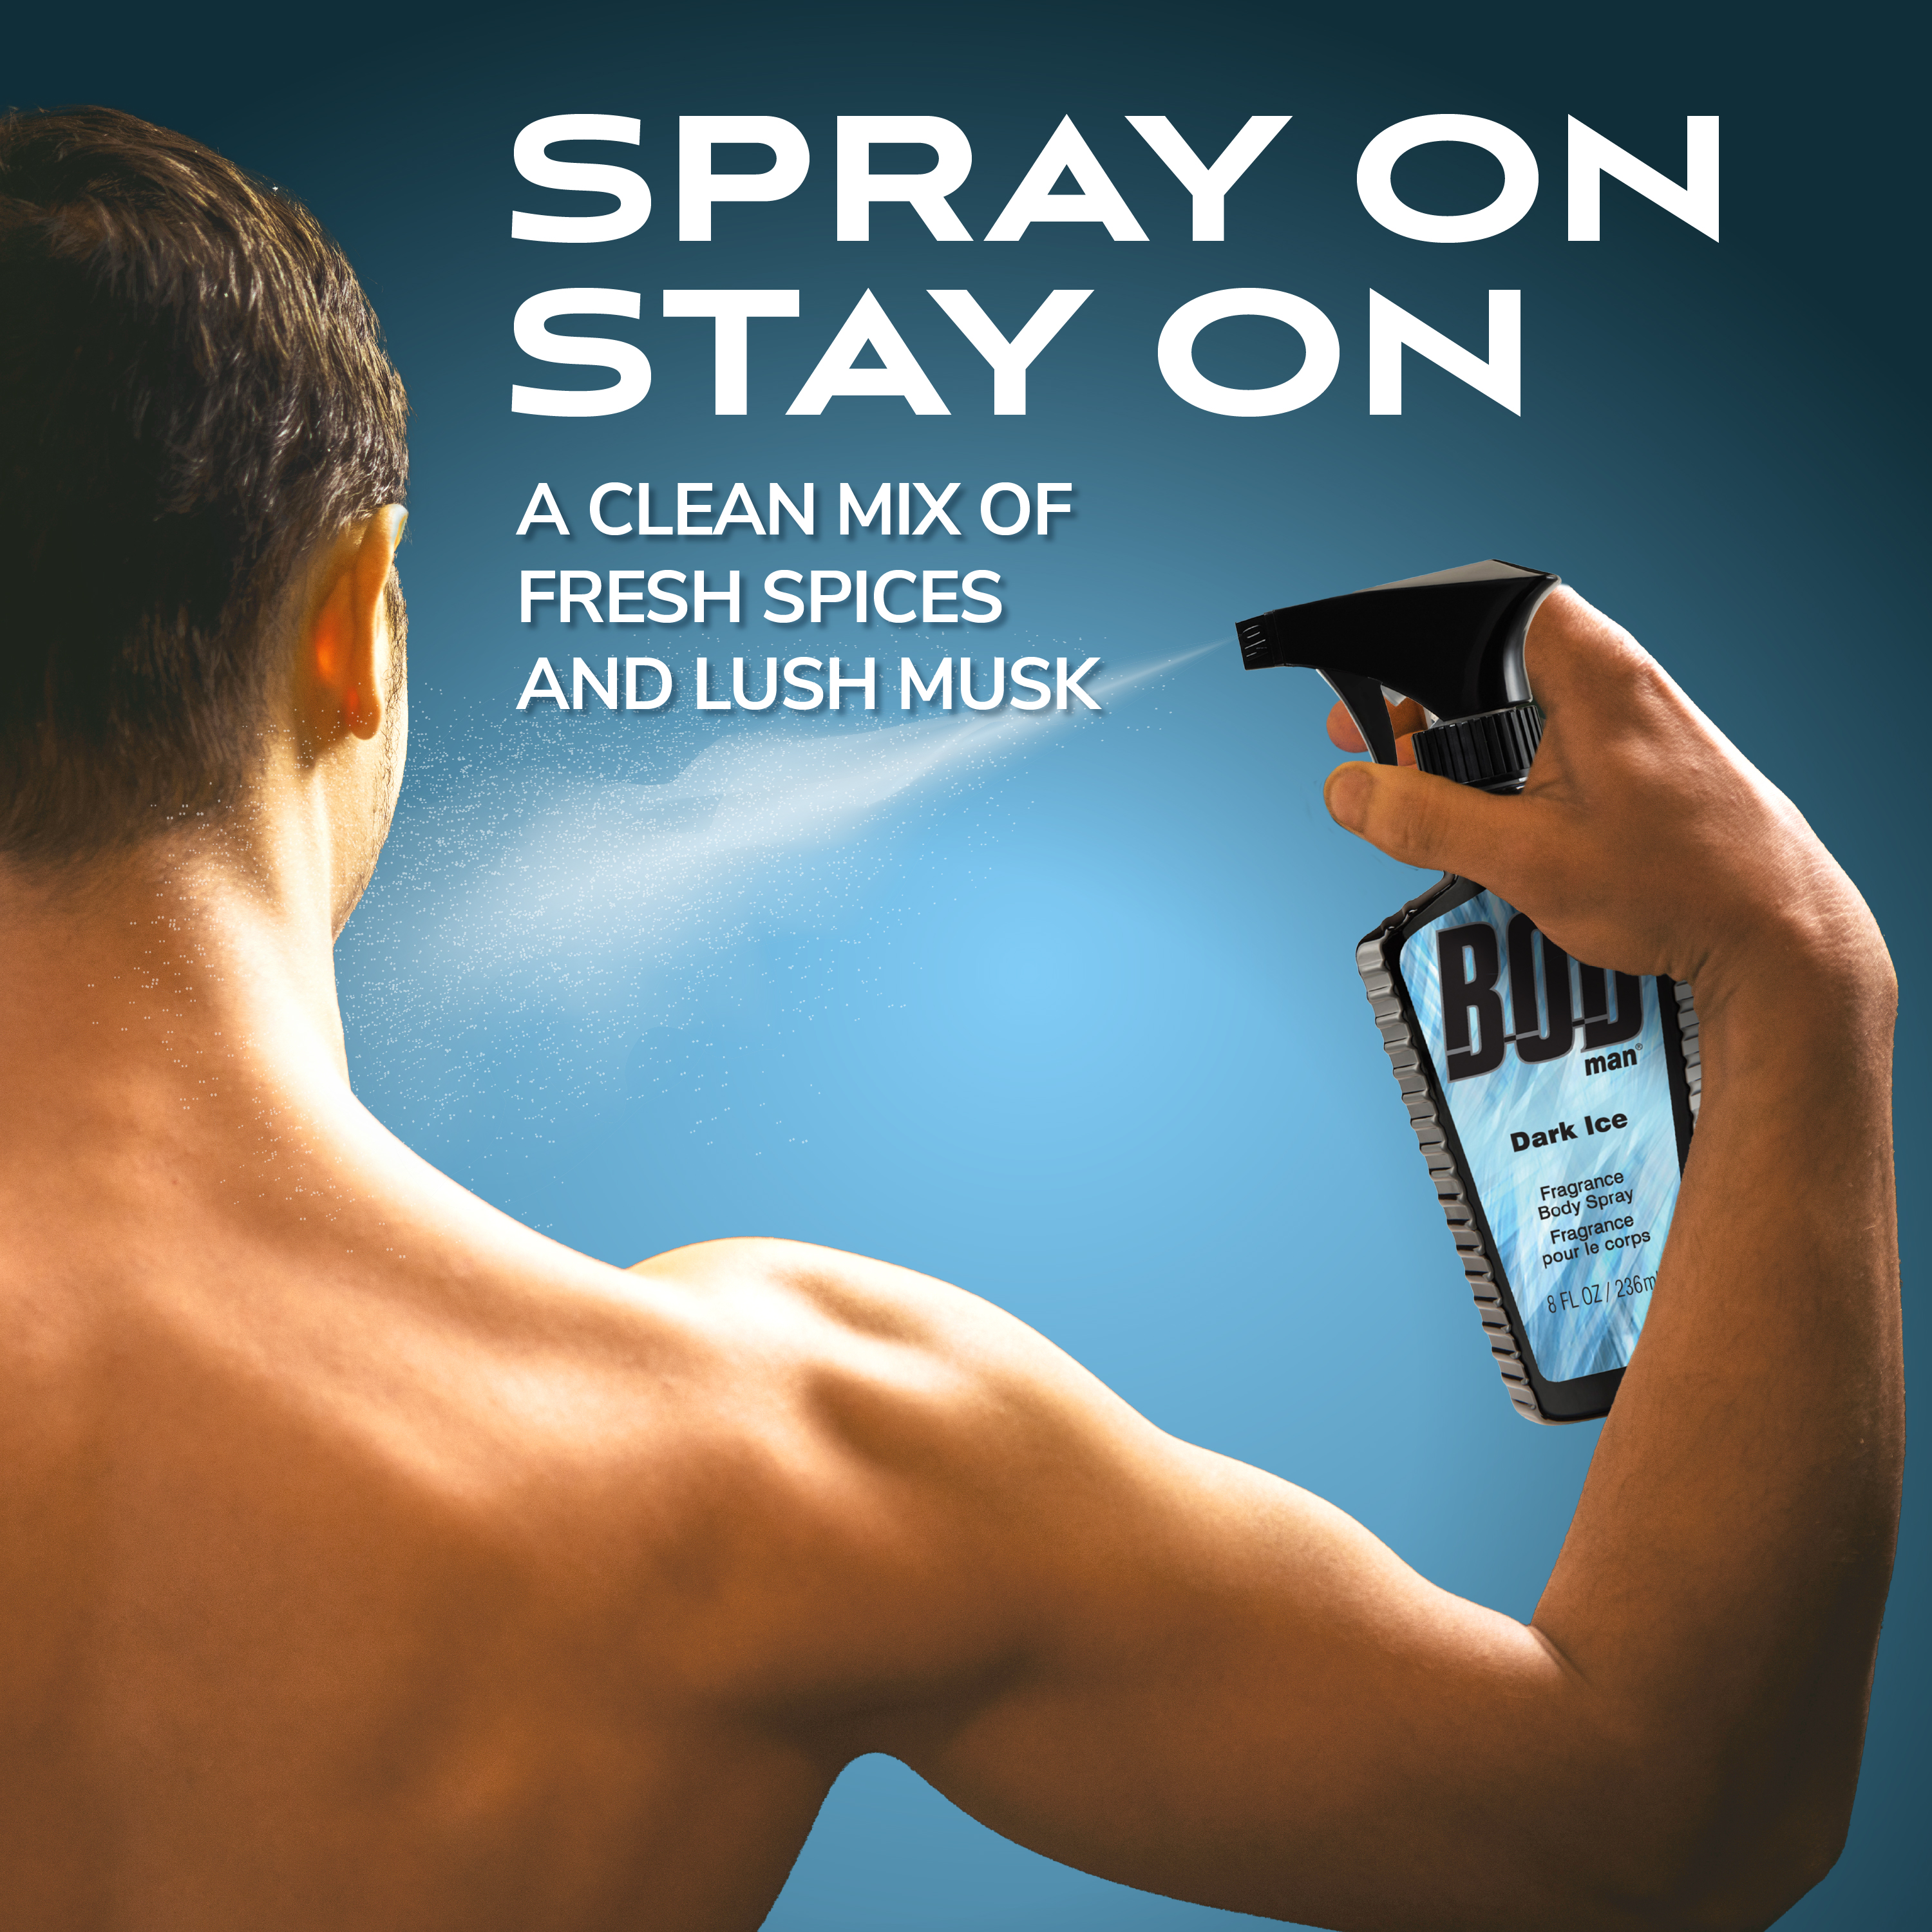 BOD Man Dark Ice Fragrance Body Spray, 8 fl oz - image 5 of 7